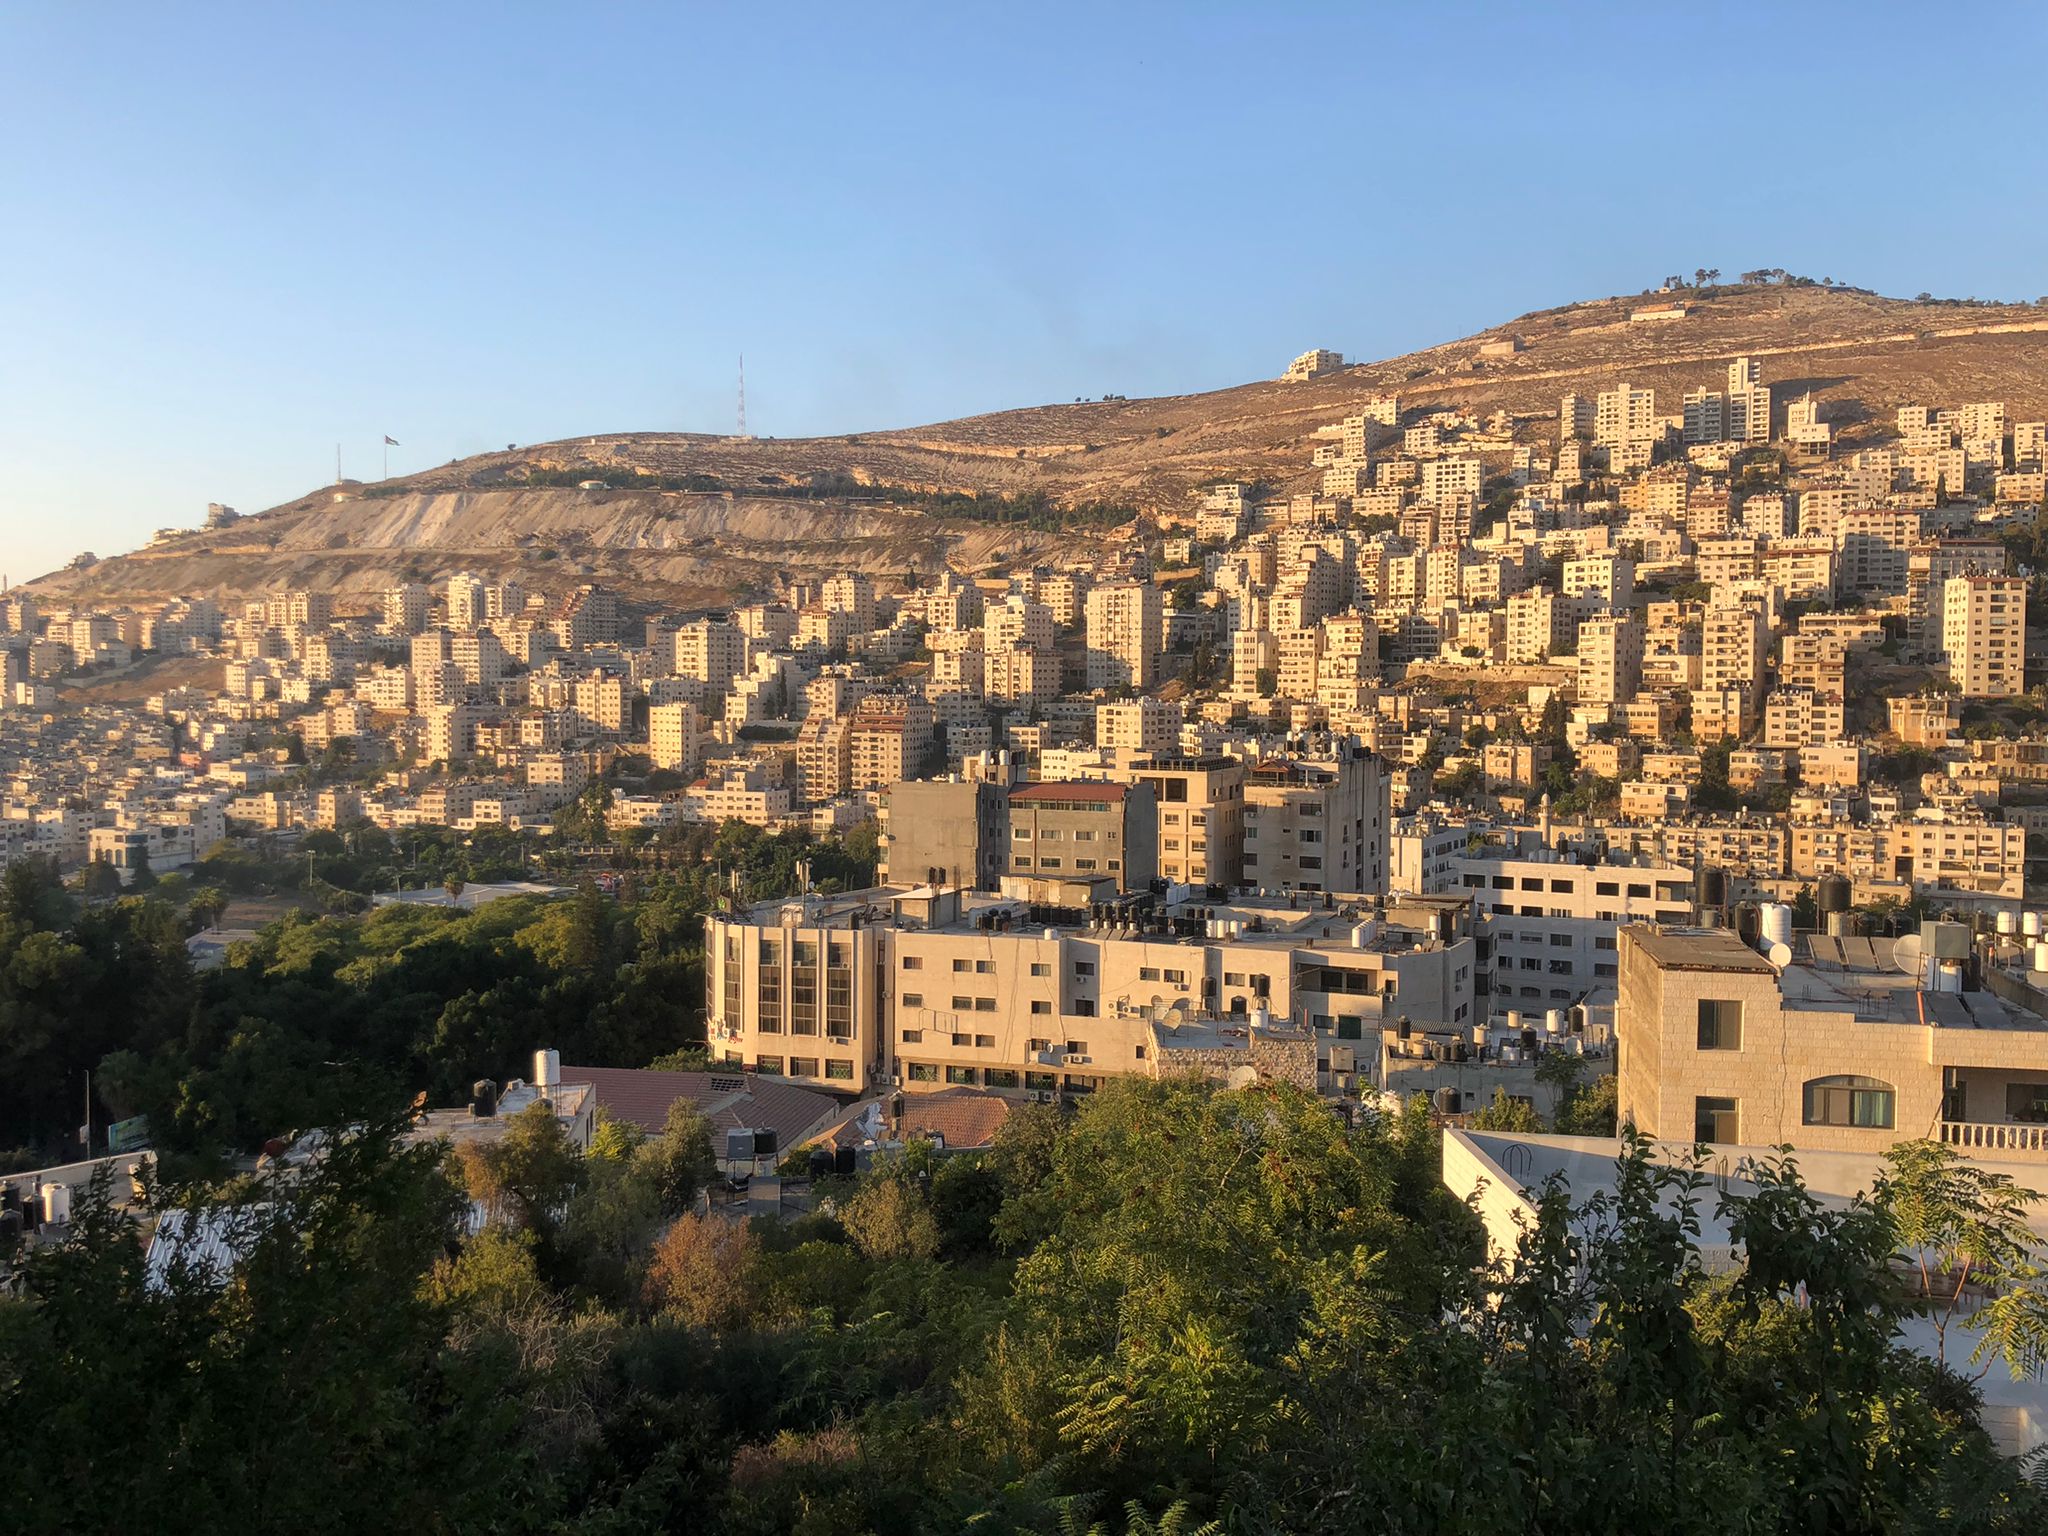 View of Nablus